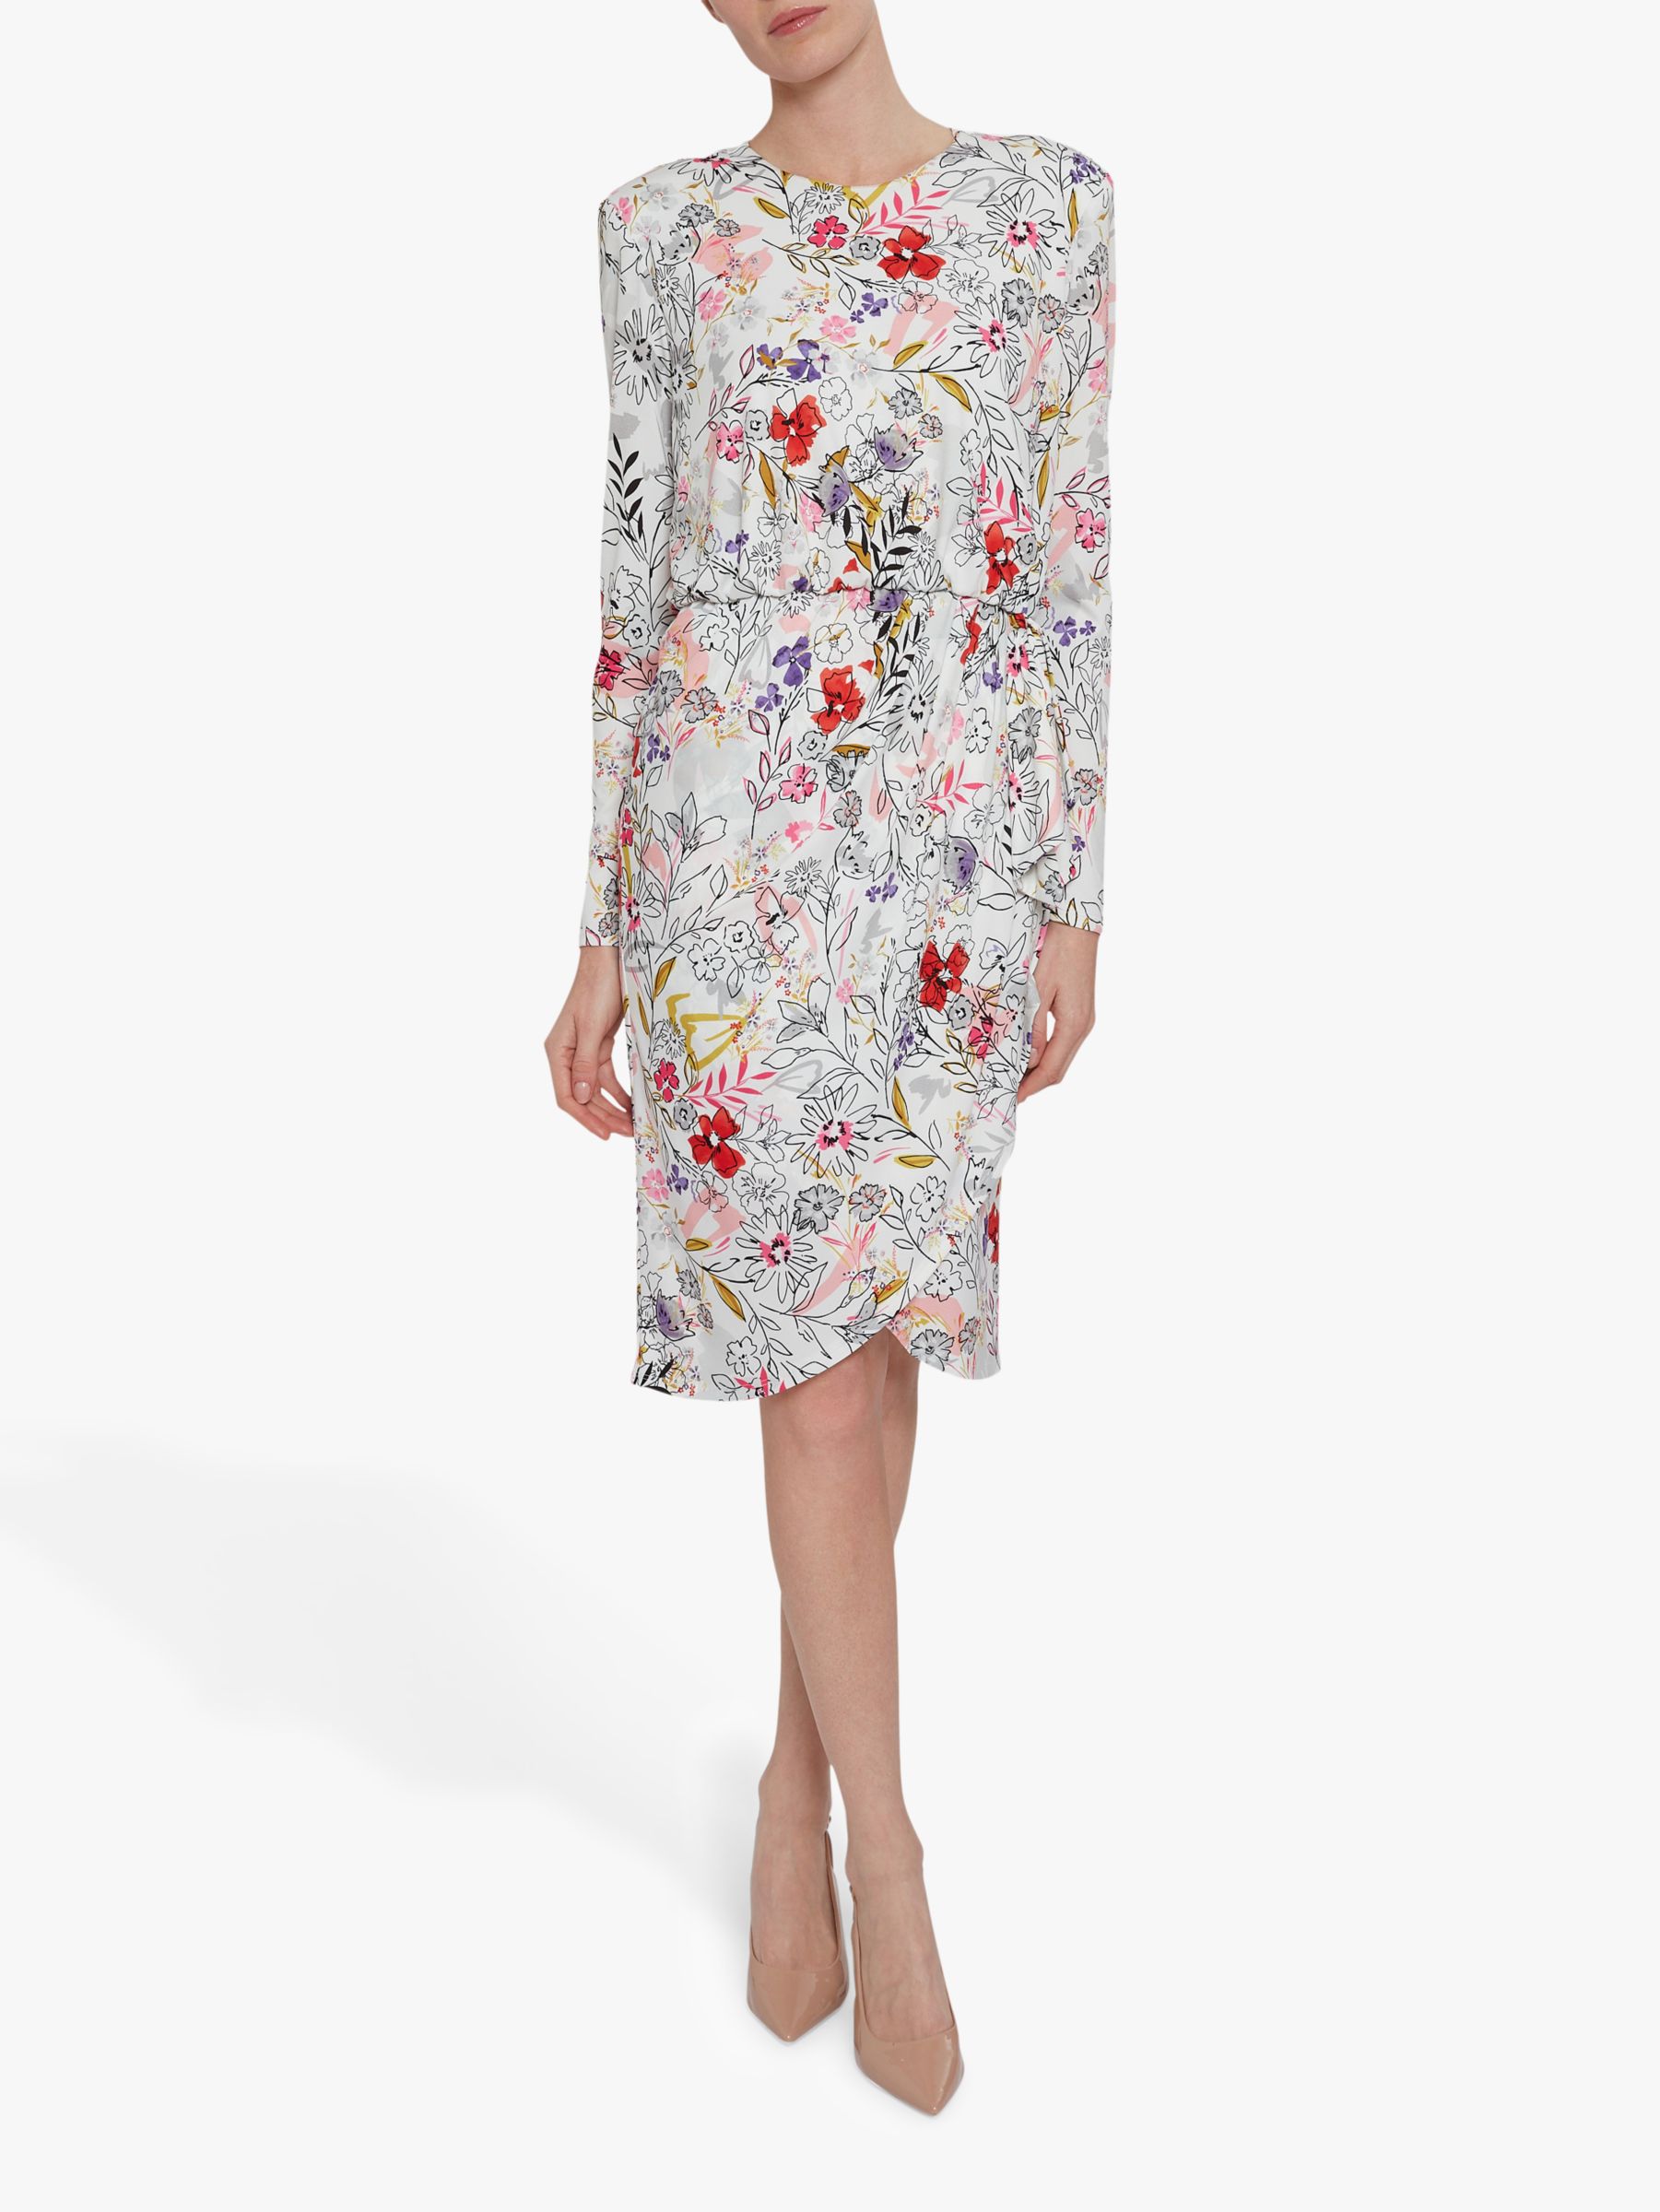 Gina Bacconi Klea Floral Dress, Multi at John Lewis & Partners